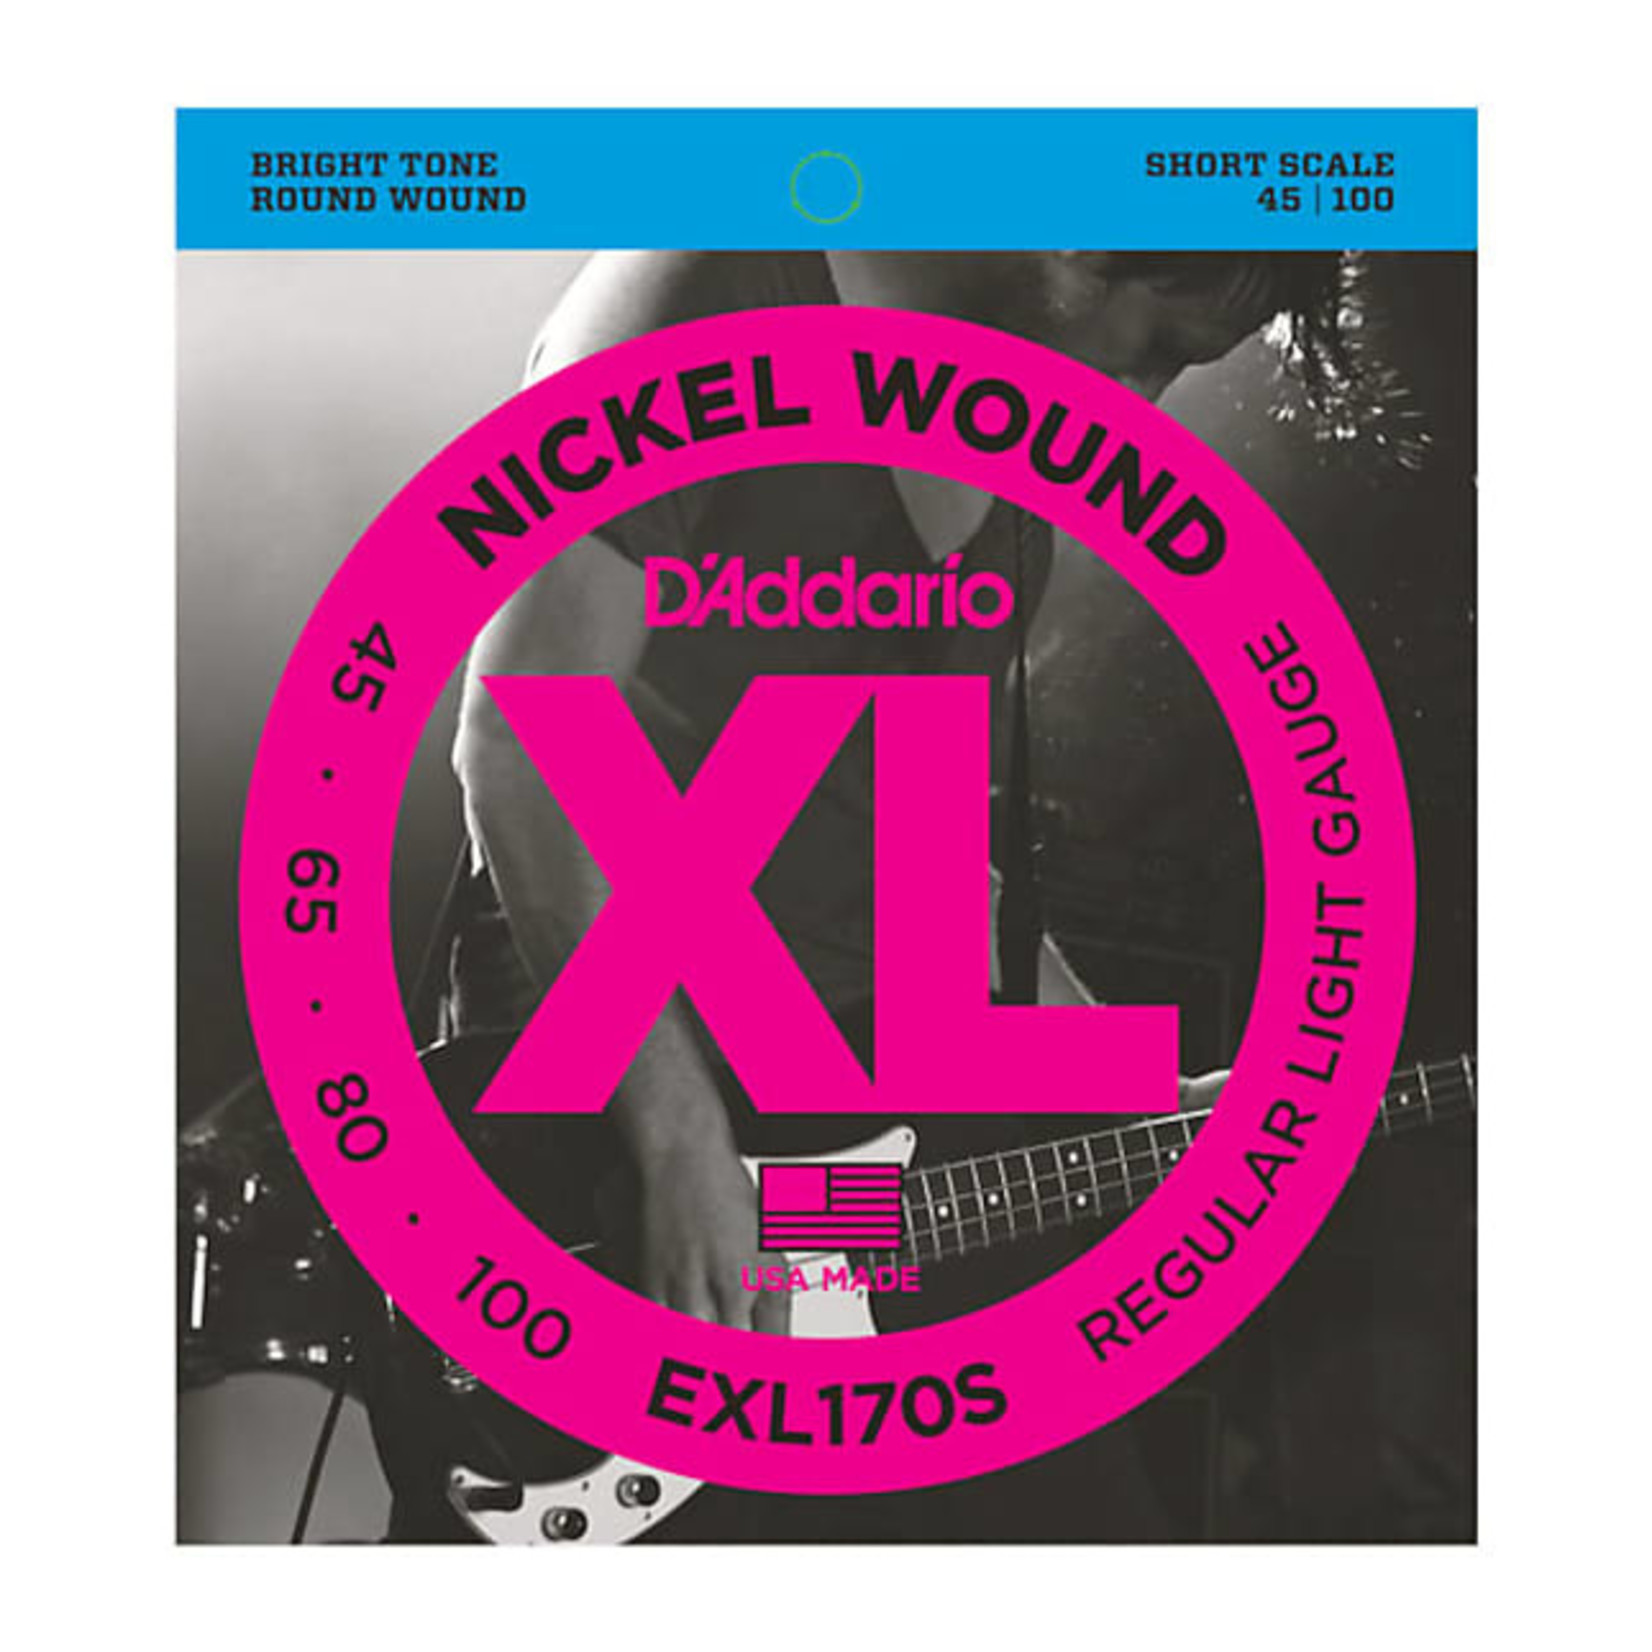 D'Addario D'Addario EXL170S Nickel Wound Bass, Light, 45-100, Short Scale